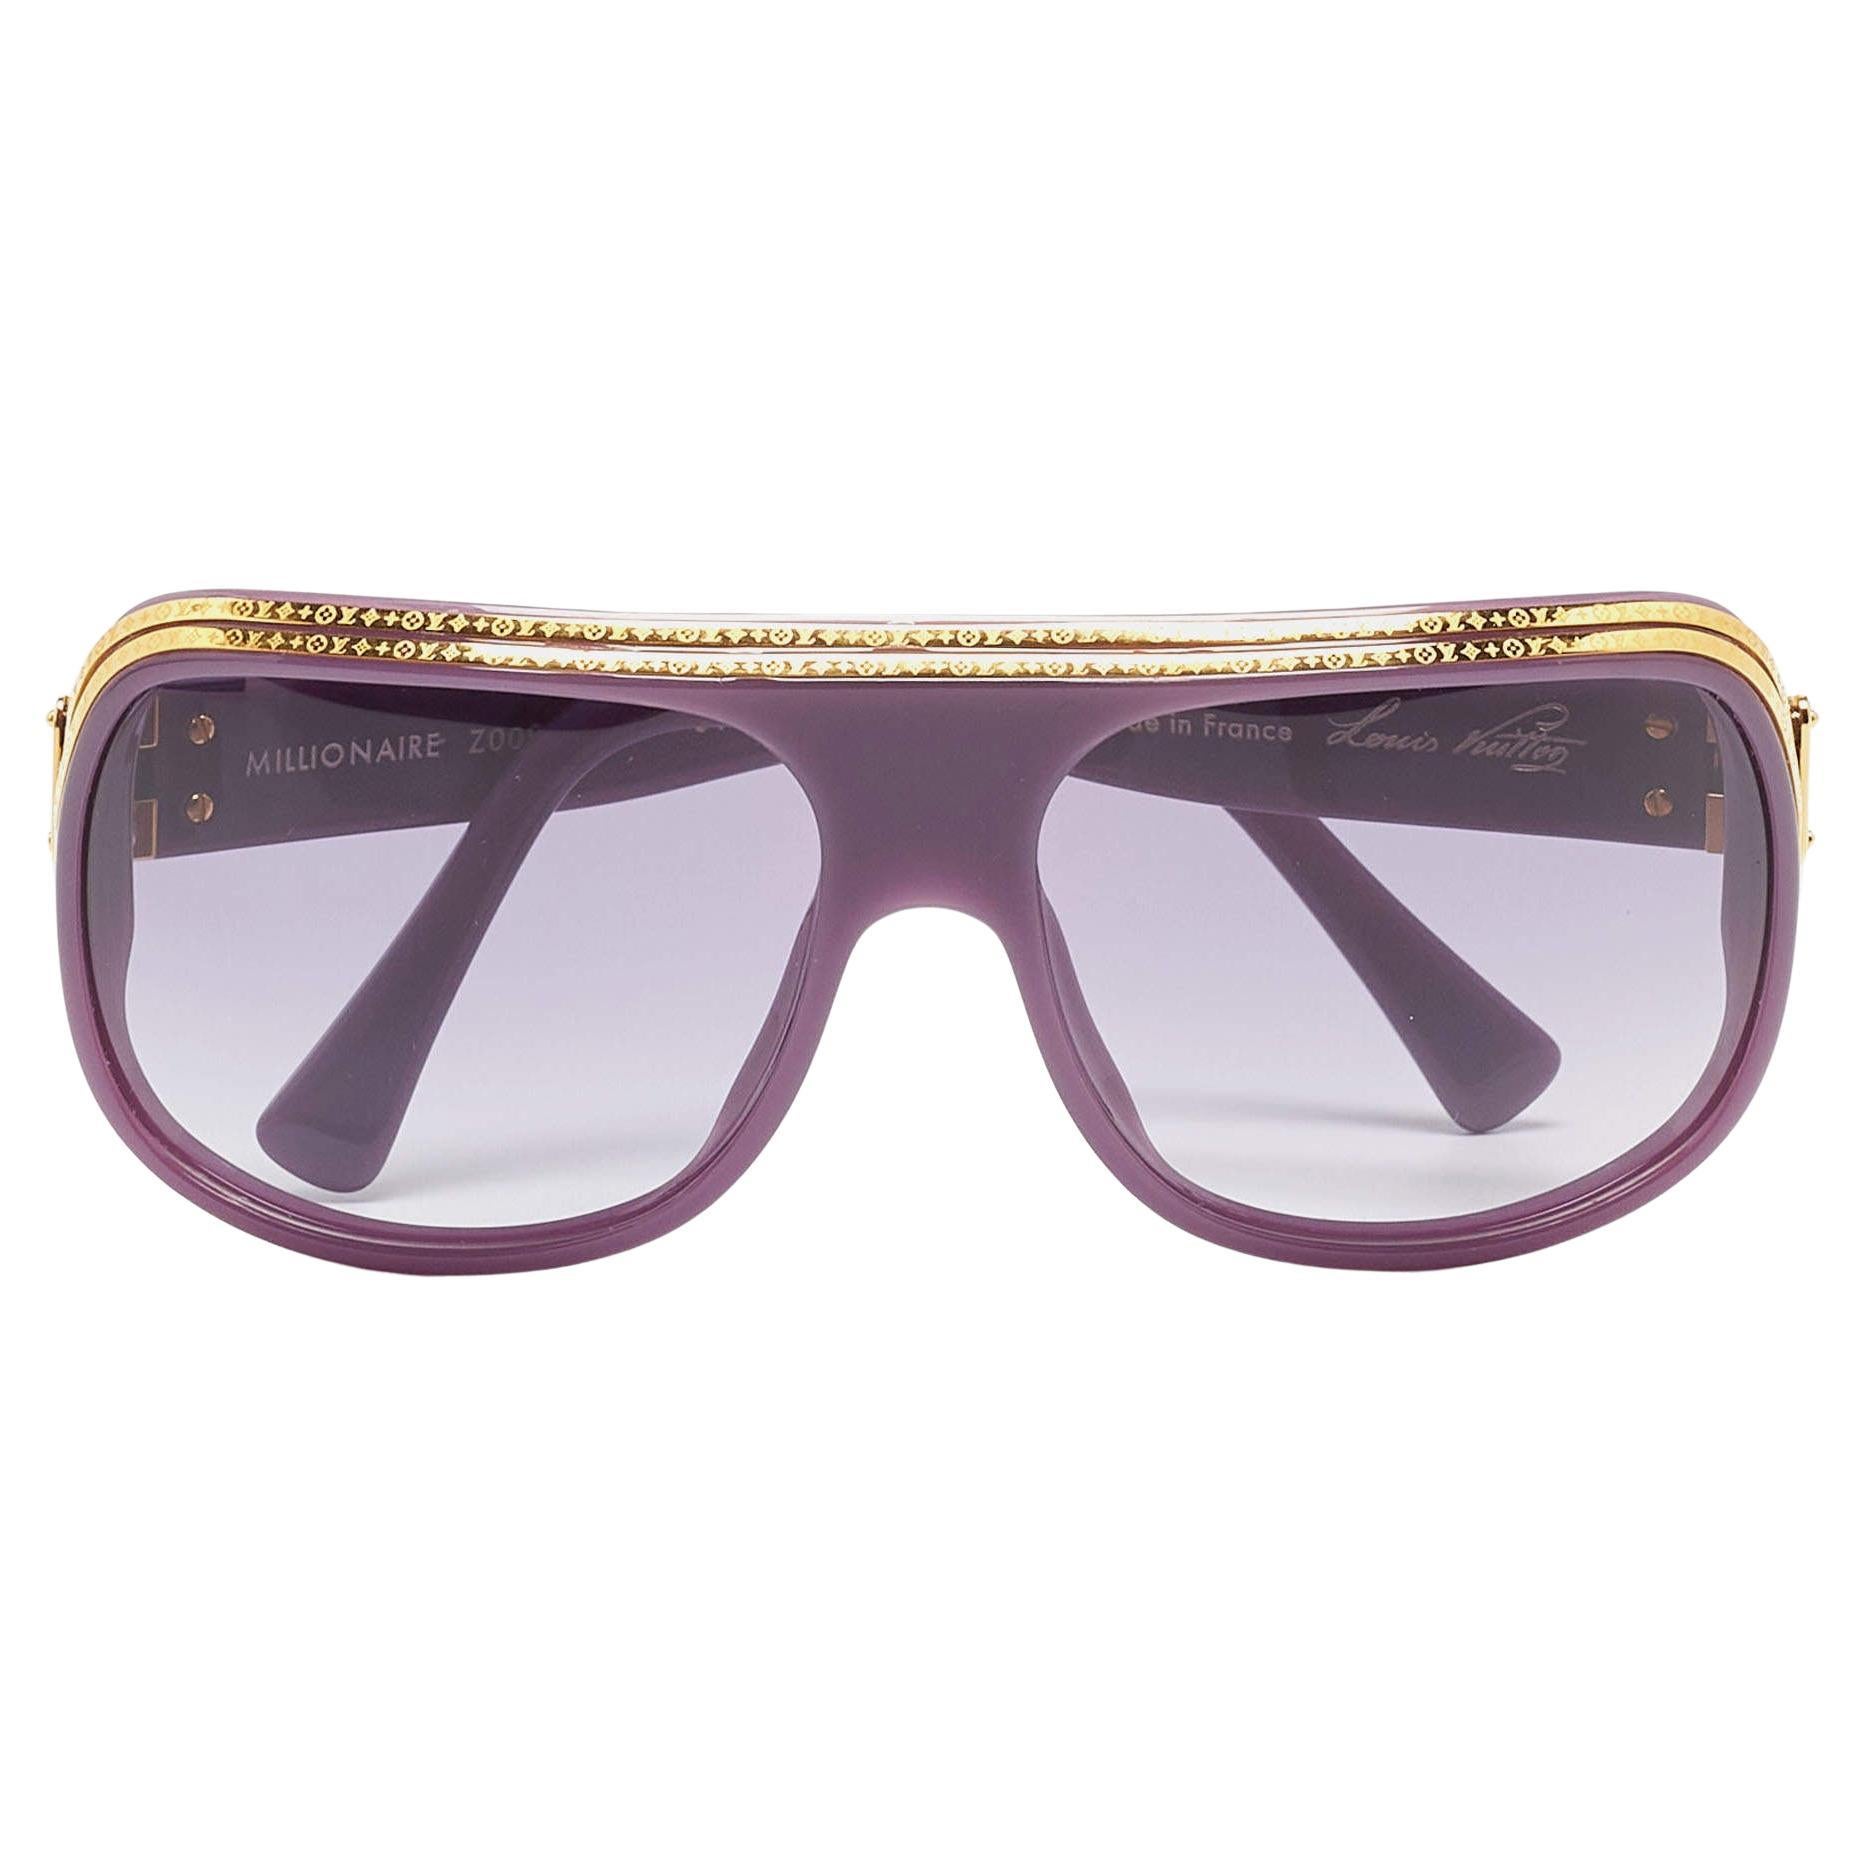 Louis Vuitton My Monogram Soft Cat Eye Sunglasses Black Acetate. Size E